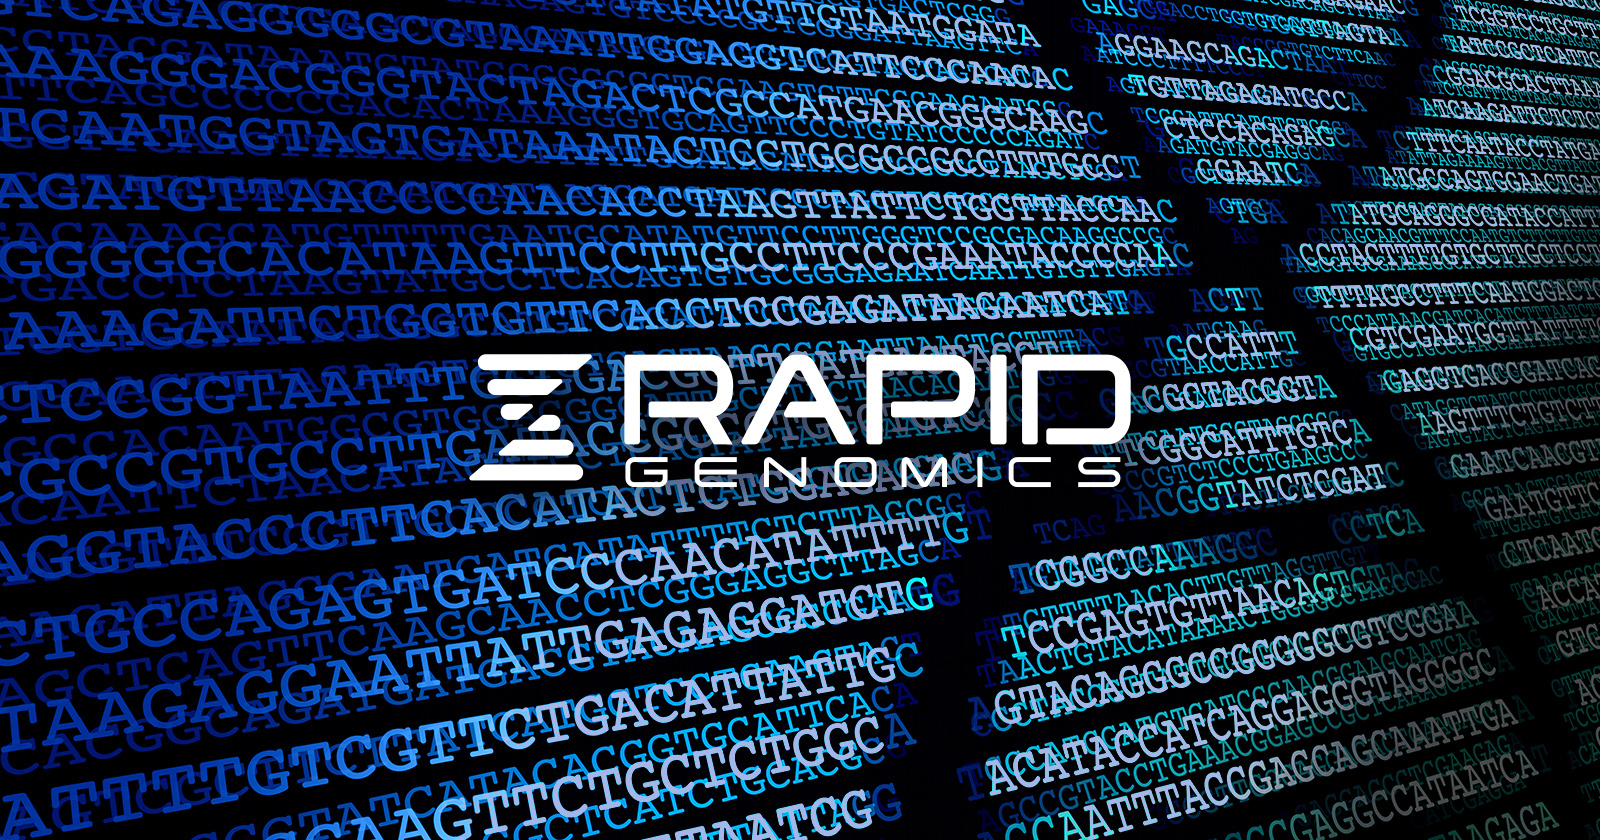 RAPID Genomics Logo